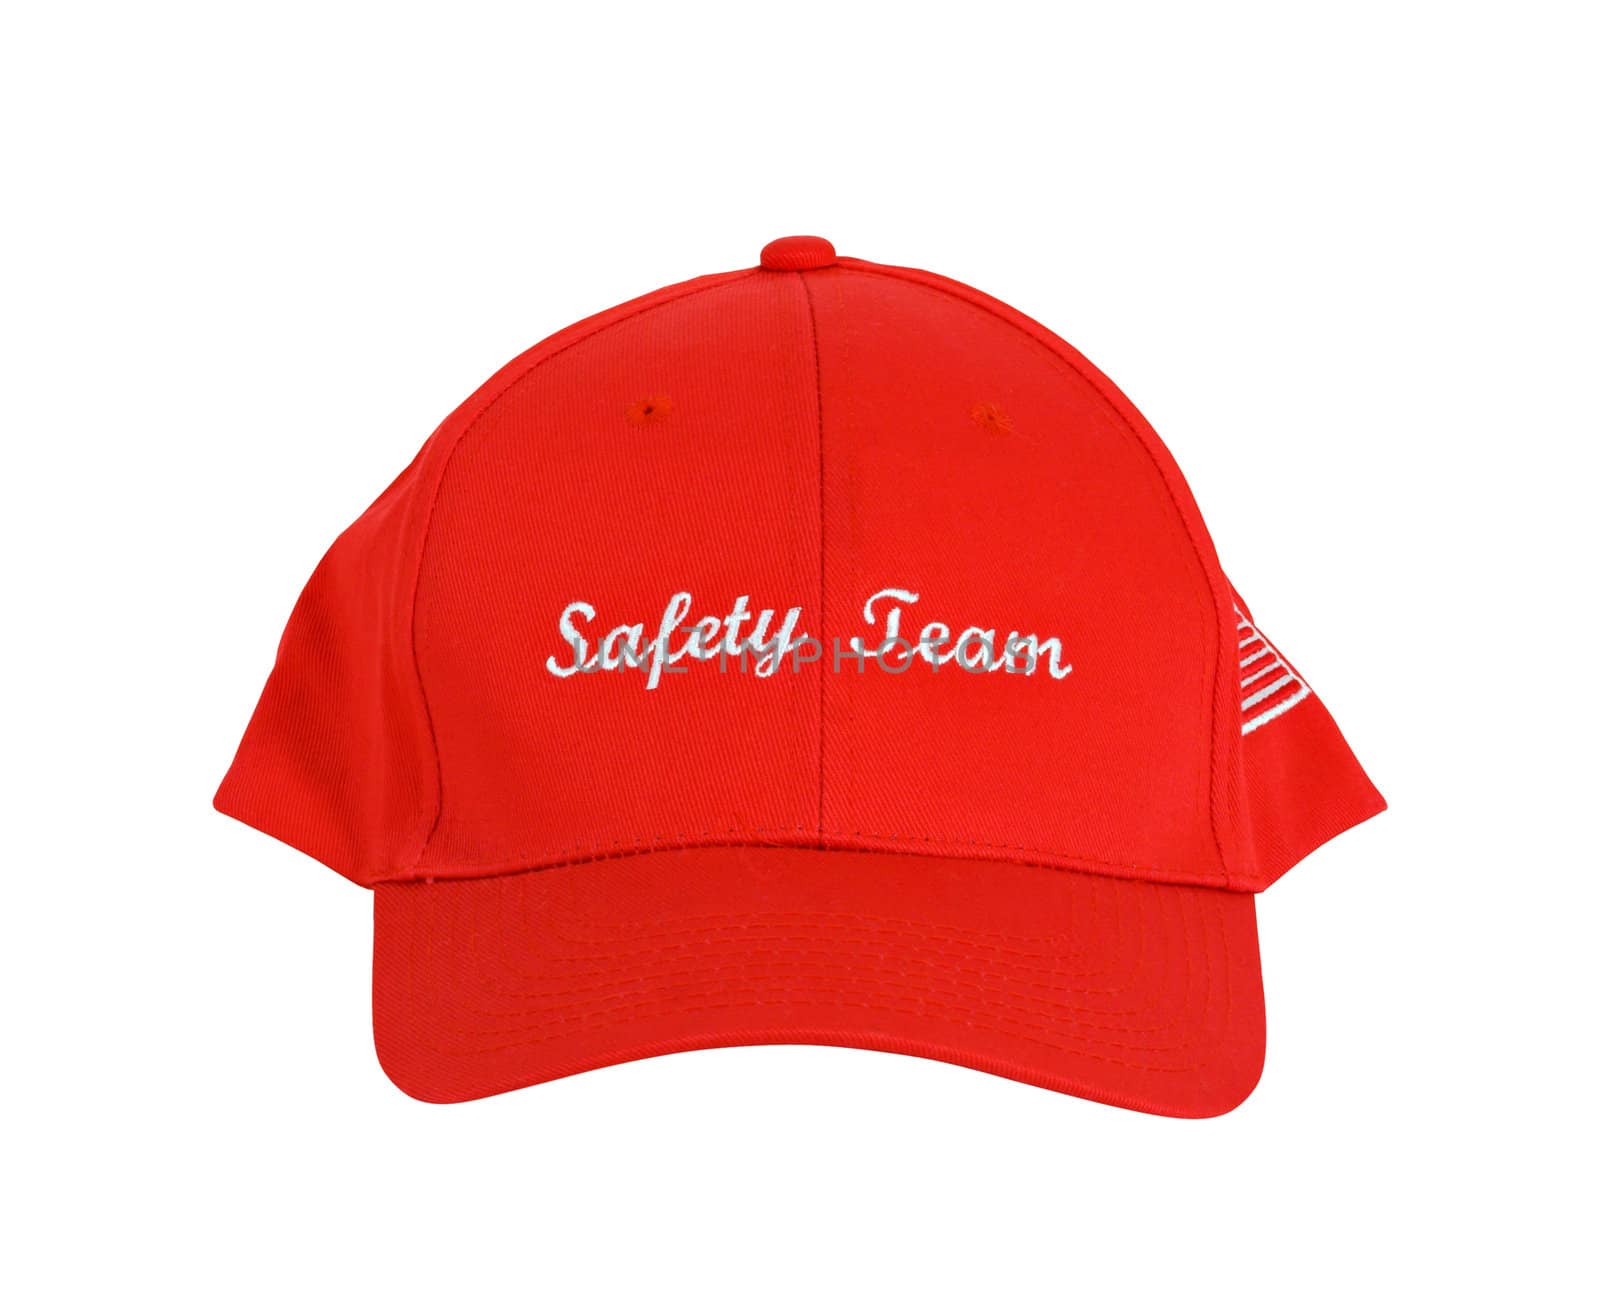 Safetey Team Hat by sbonk